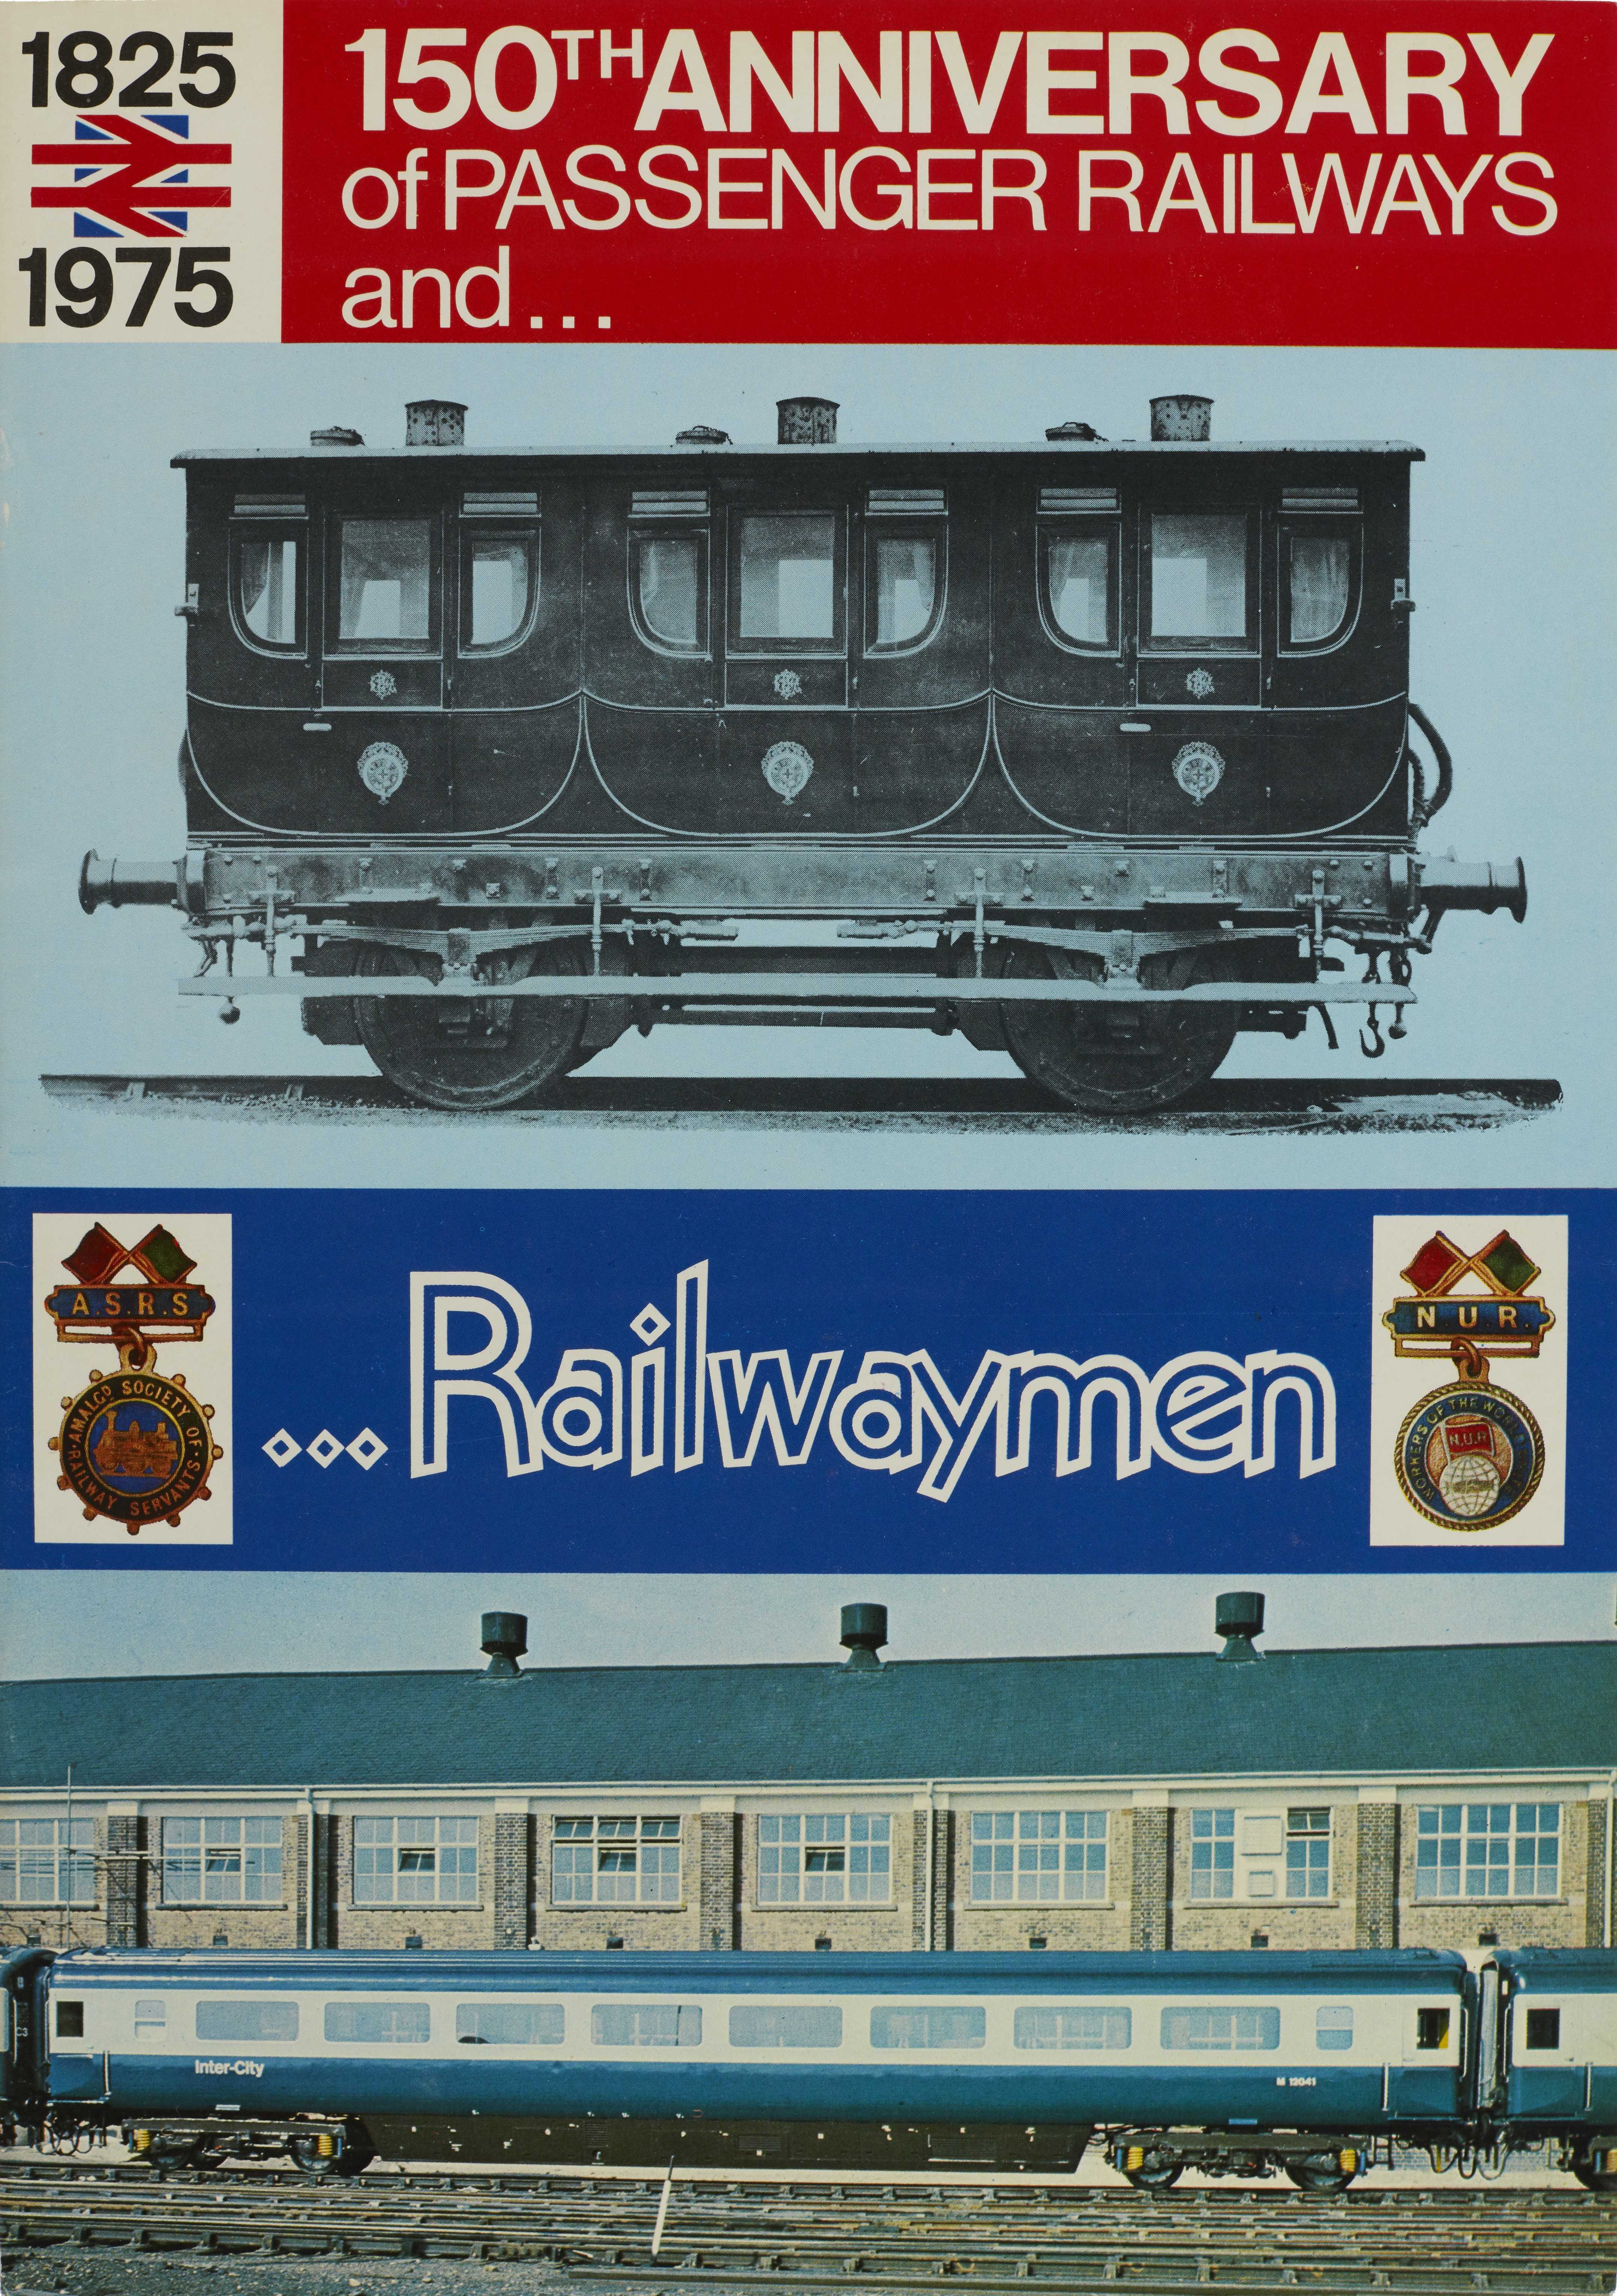 The front cover of Railwaymen Magazine’s 150th Anniversary of Passenger Railways and Railwaymen.